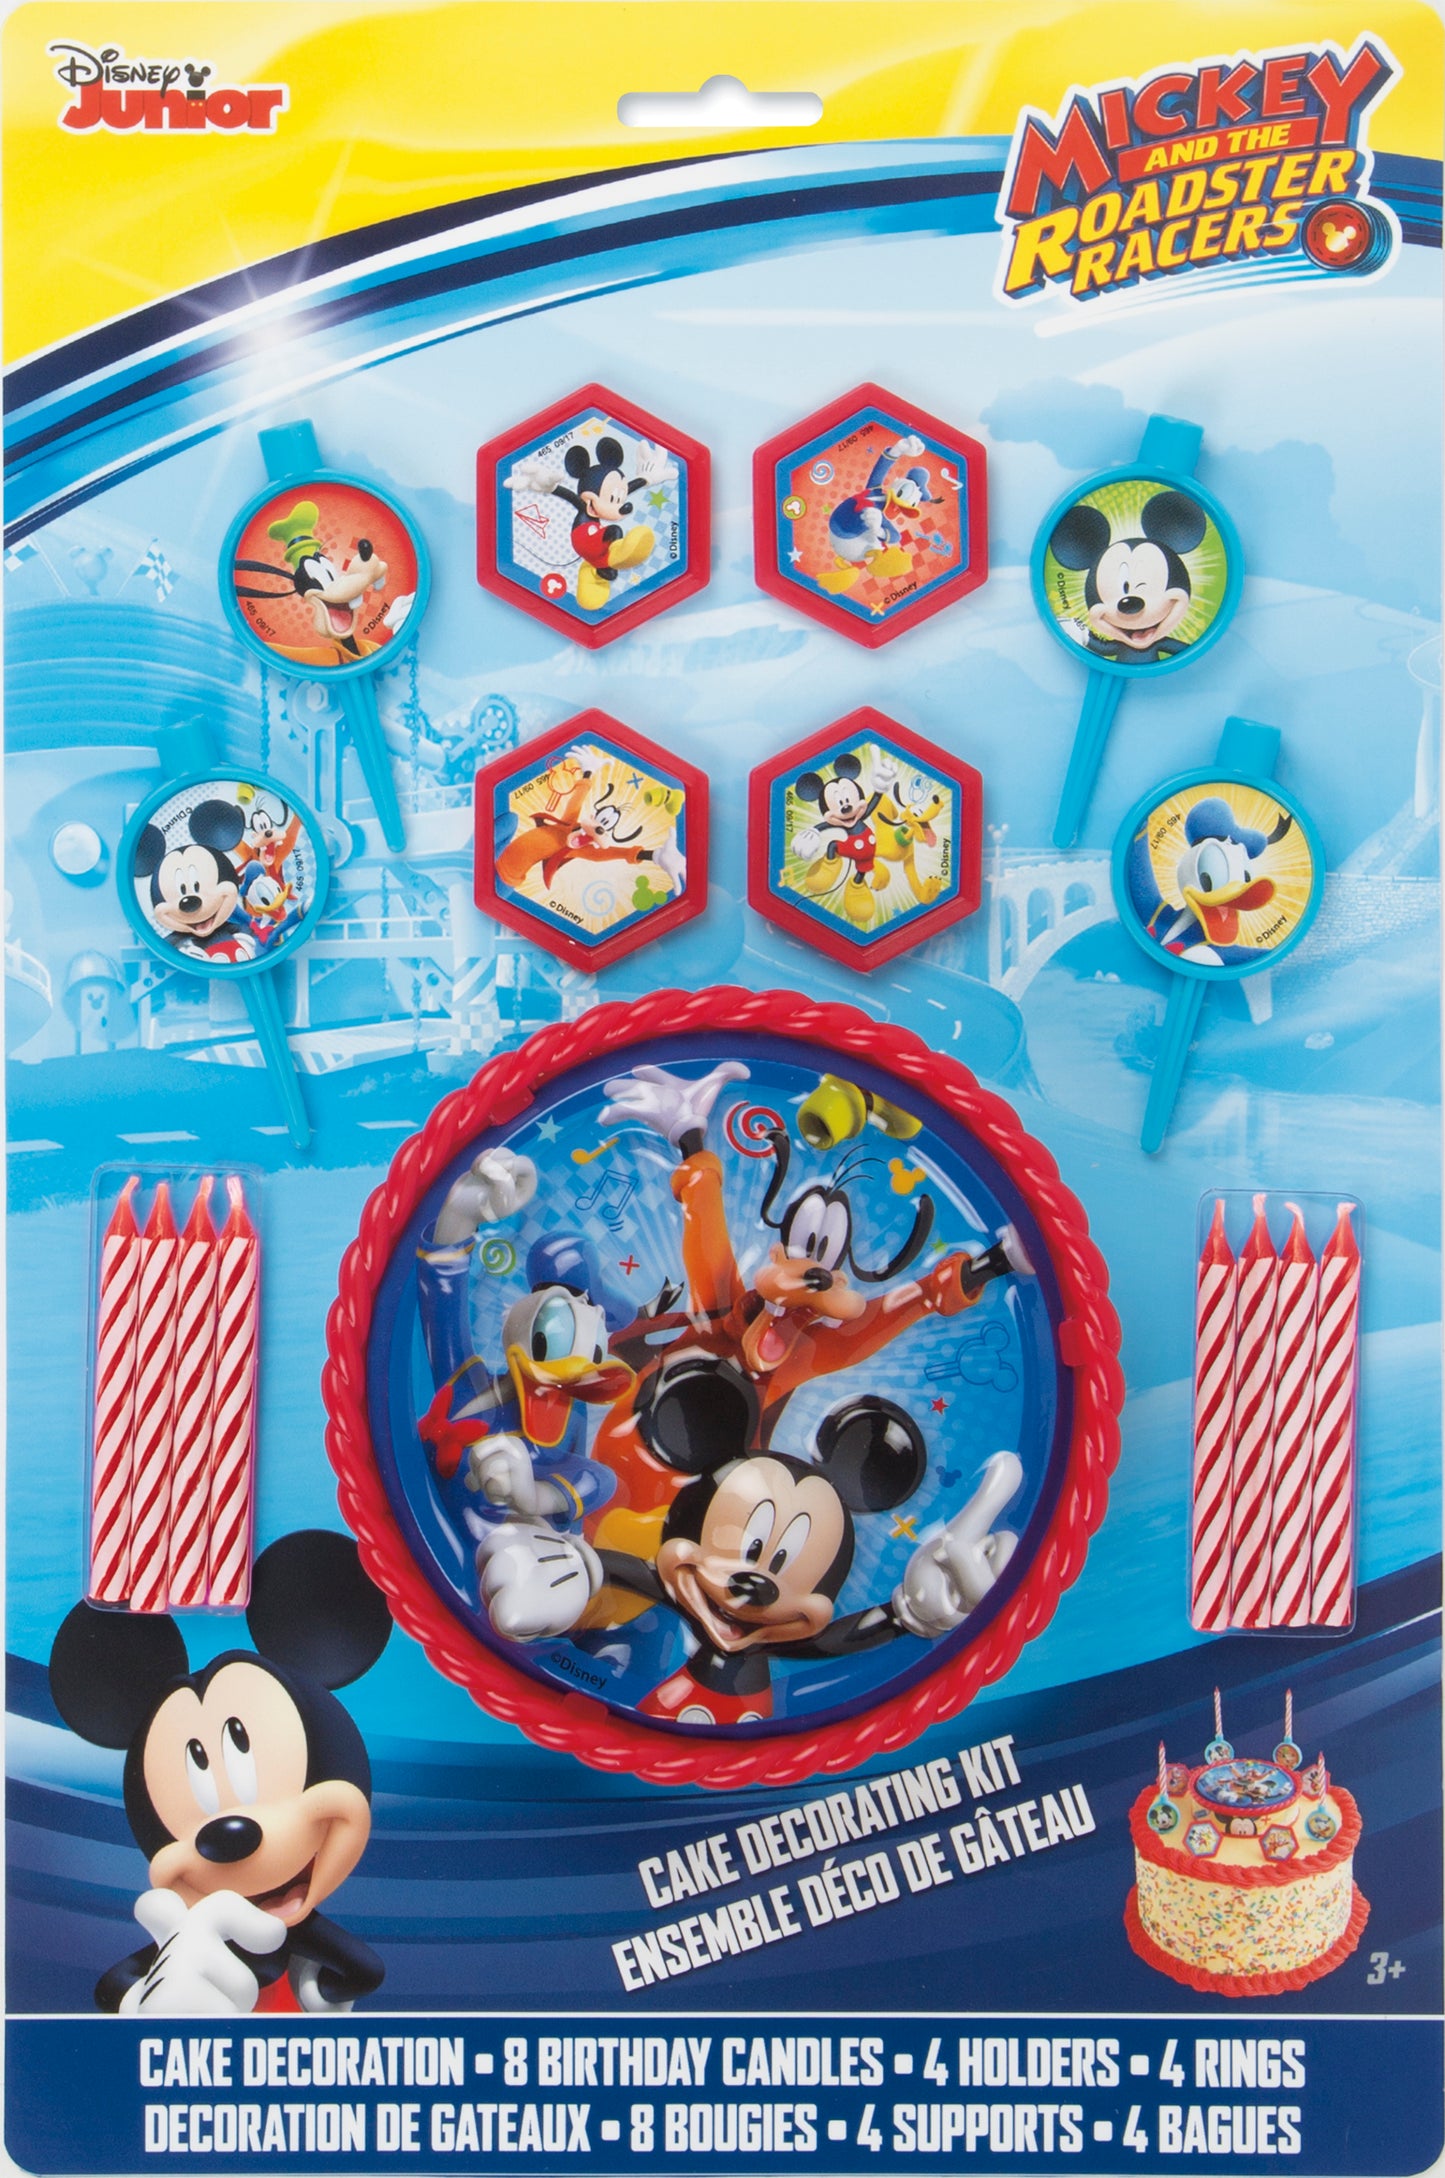 Disney Mickey Mouse Roadster Cake Decorating Kit, 17-pc